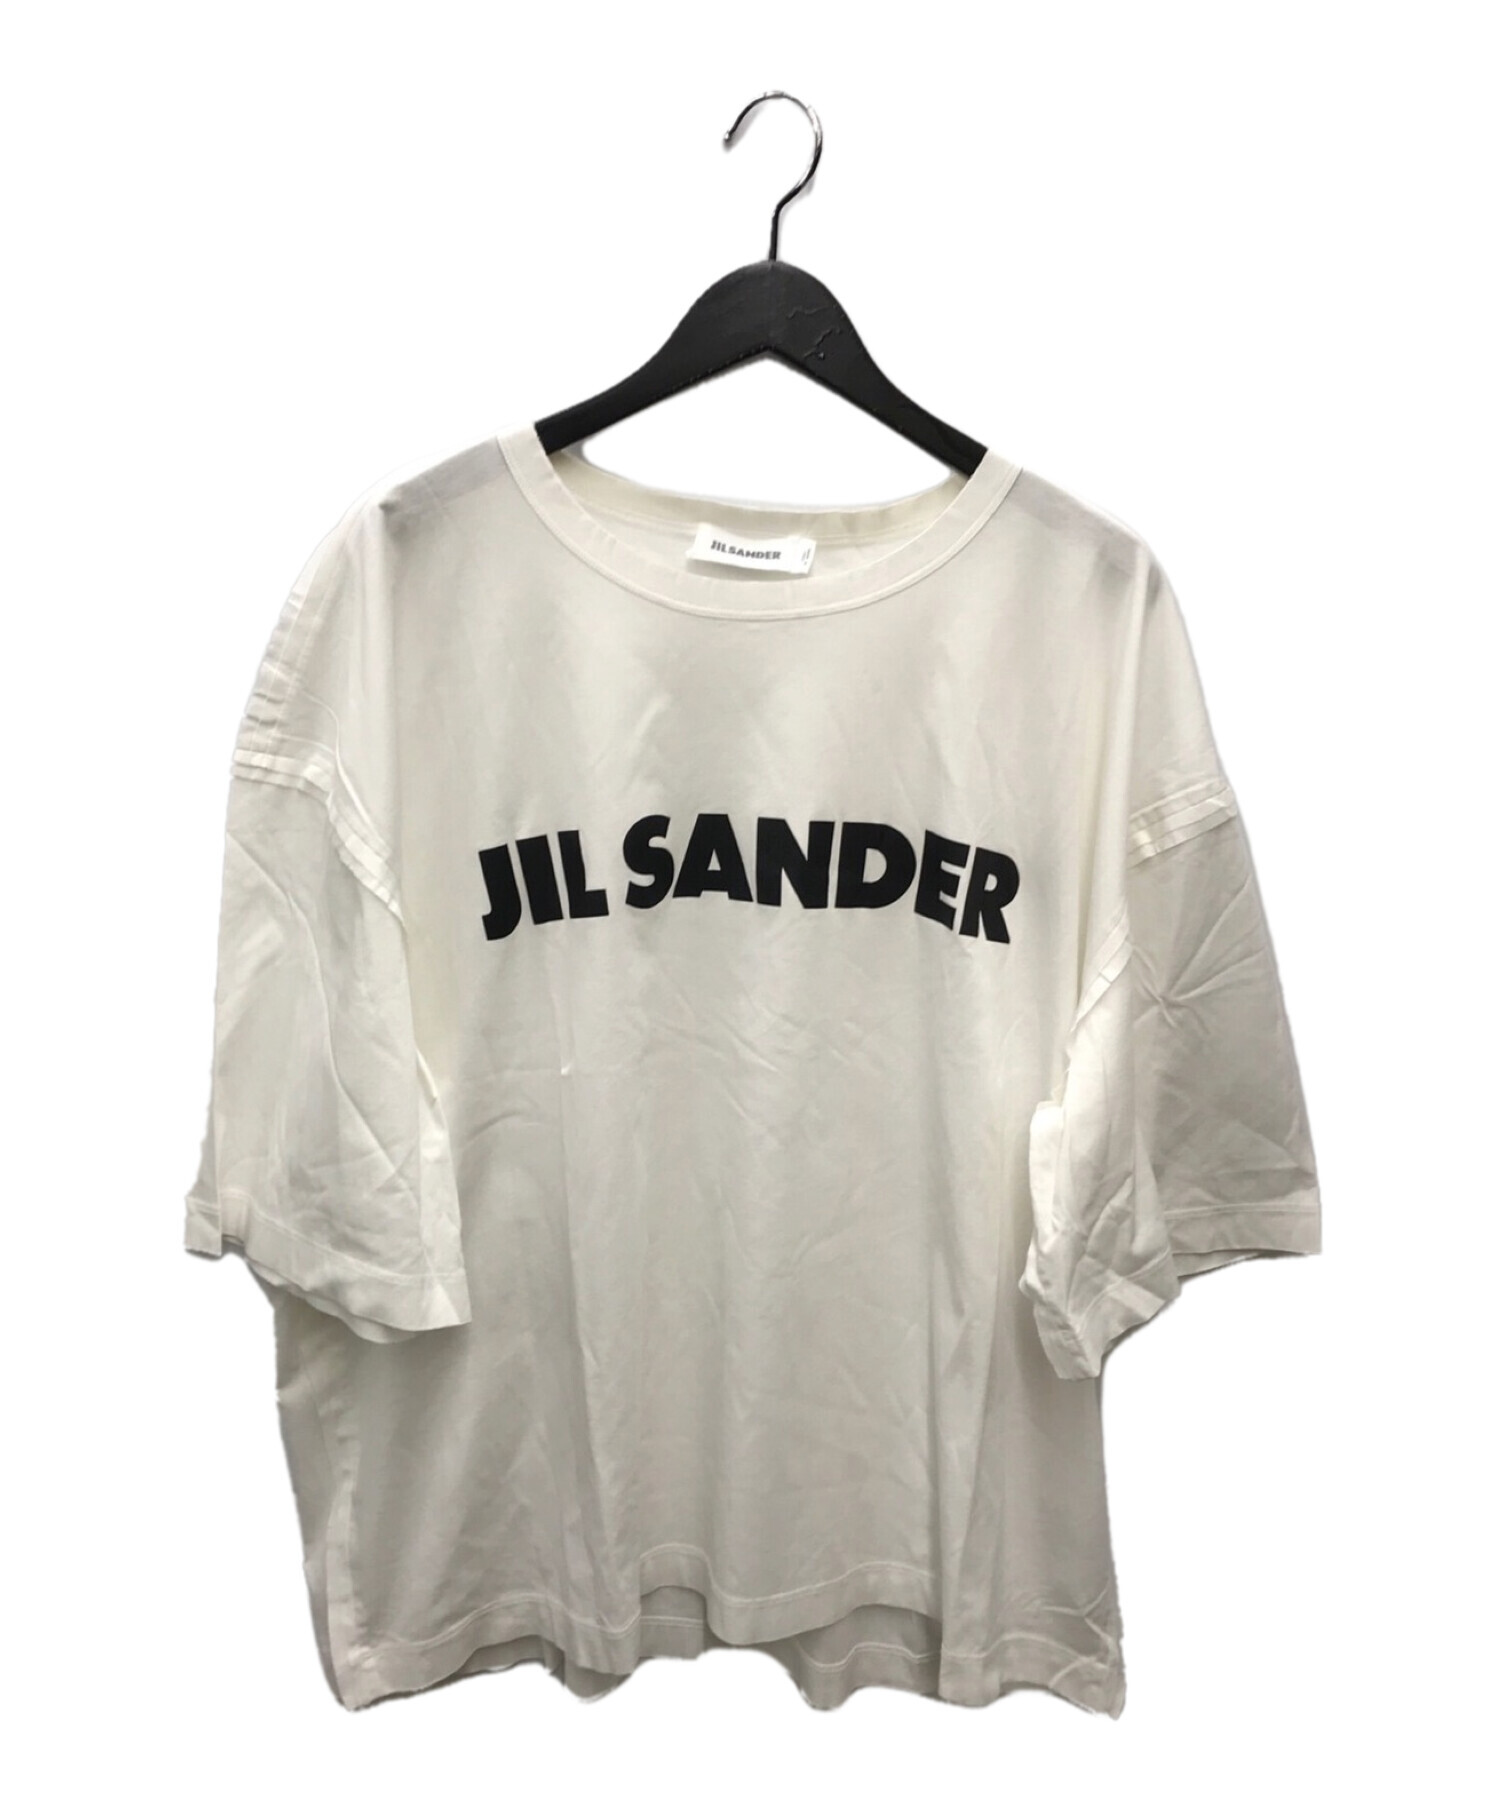 JIL SANDER (ジルサンダー) ロゴプリントTシャツ ホワイト サイズ:L